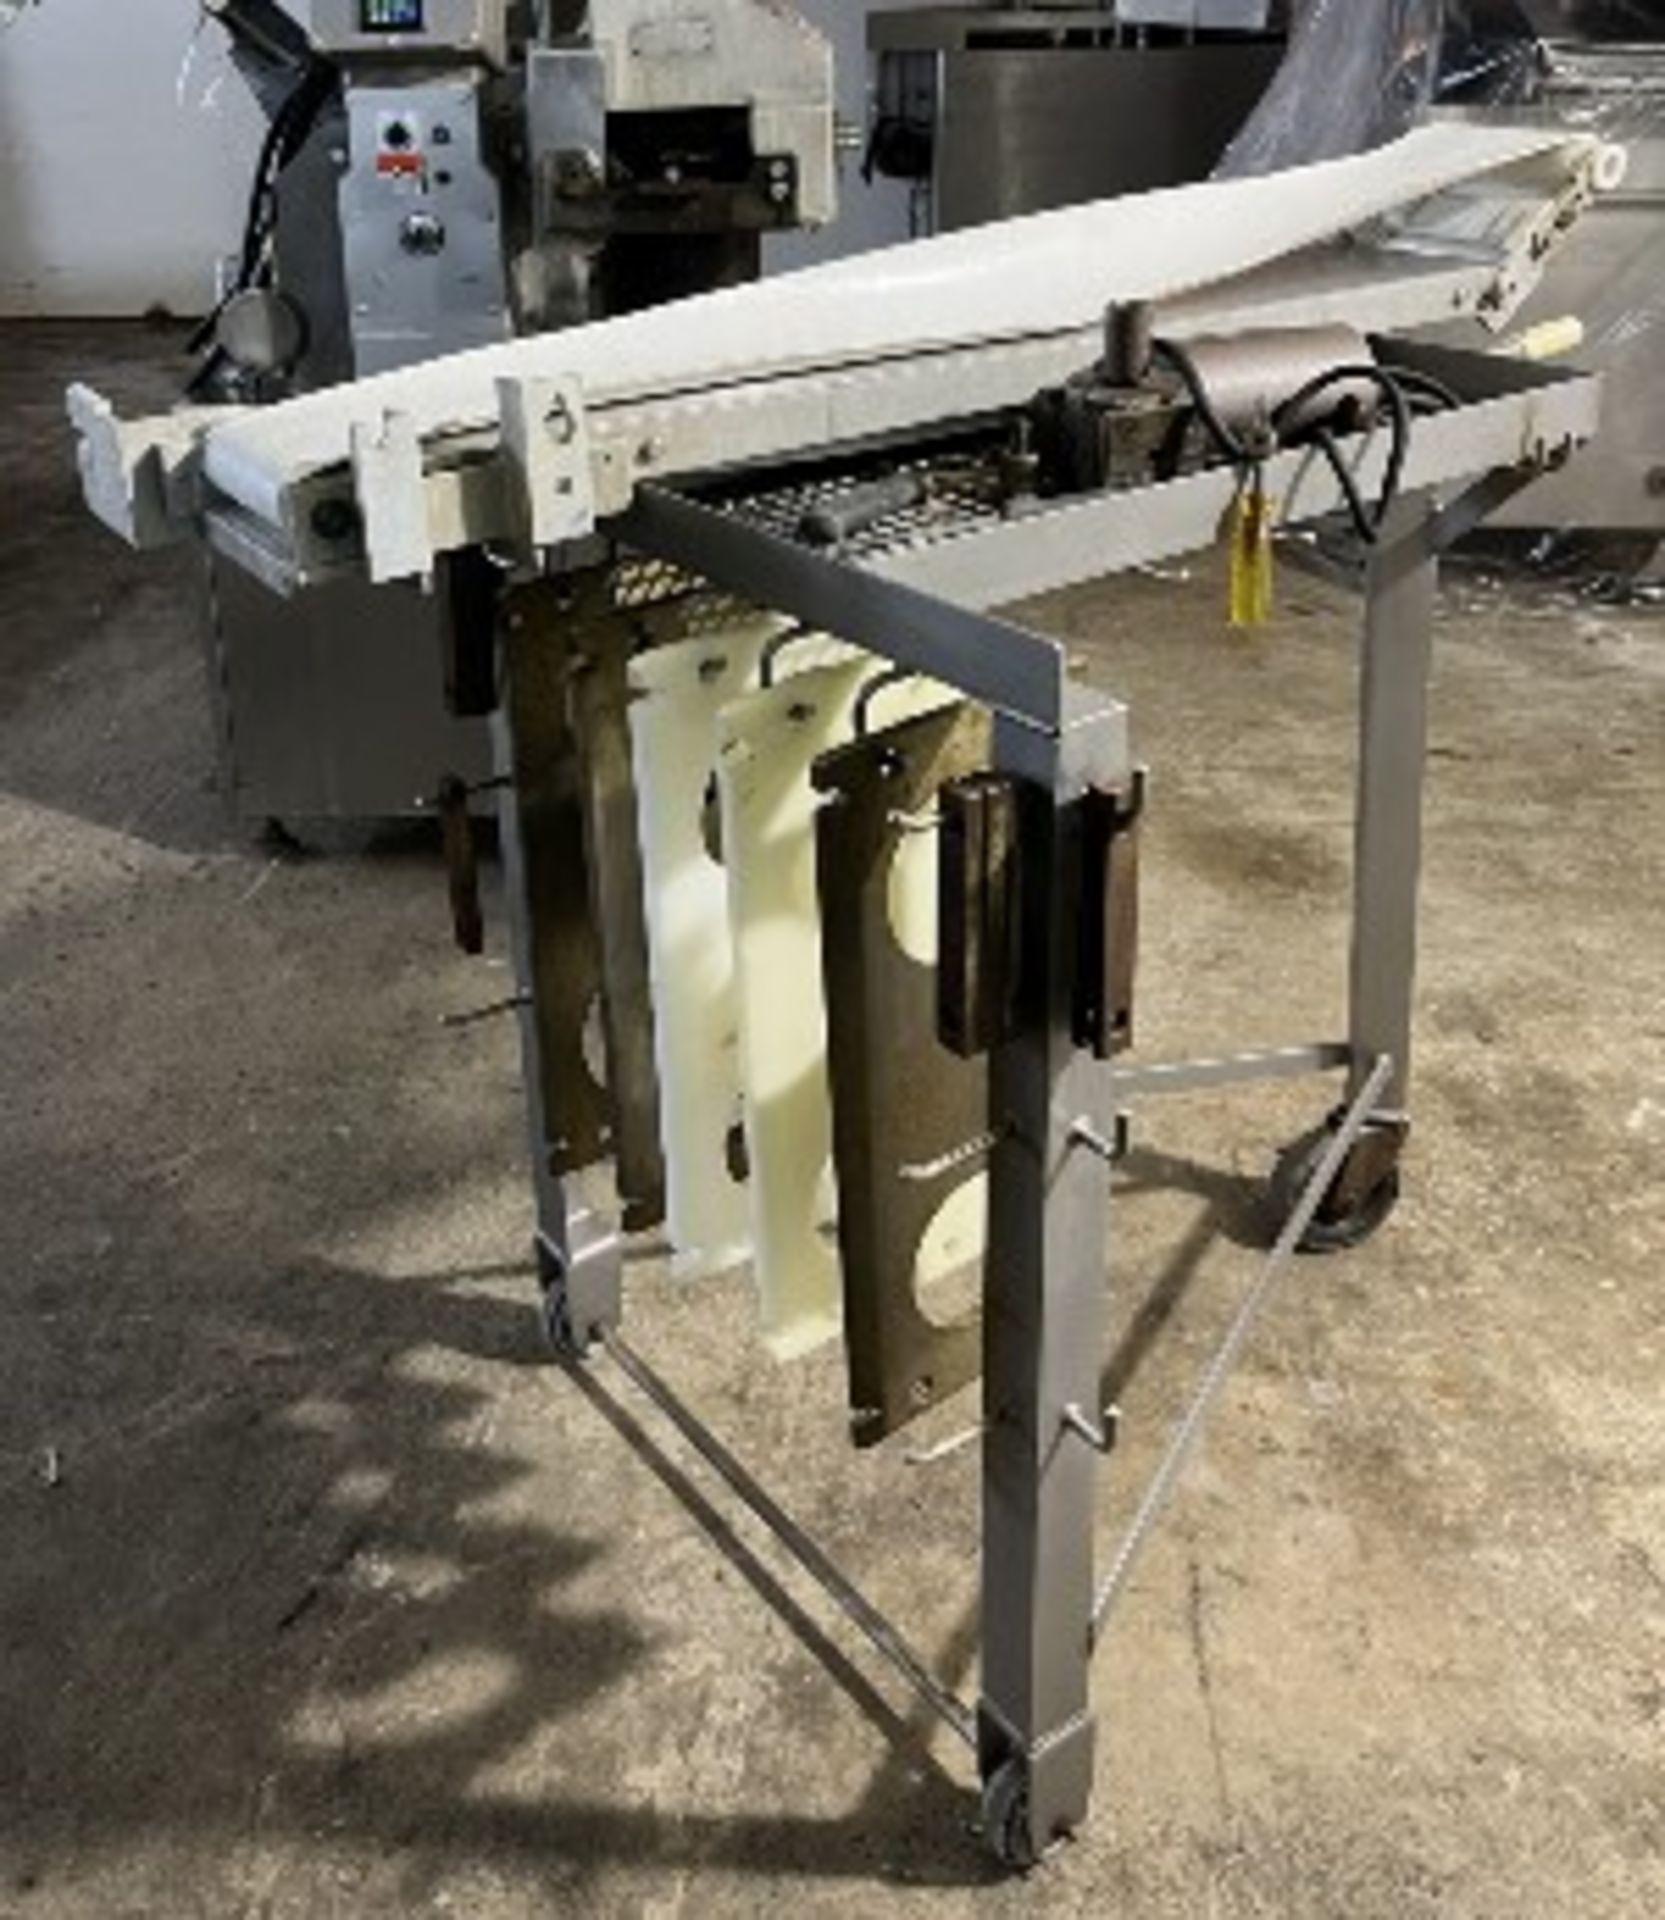 Hollymatic Patty Machine, Model 8/65, S/N 198 (Loading Fee $100) (Located Oklahoma City, OK) - Image 2 of 4